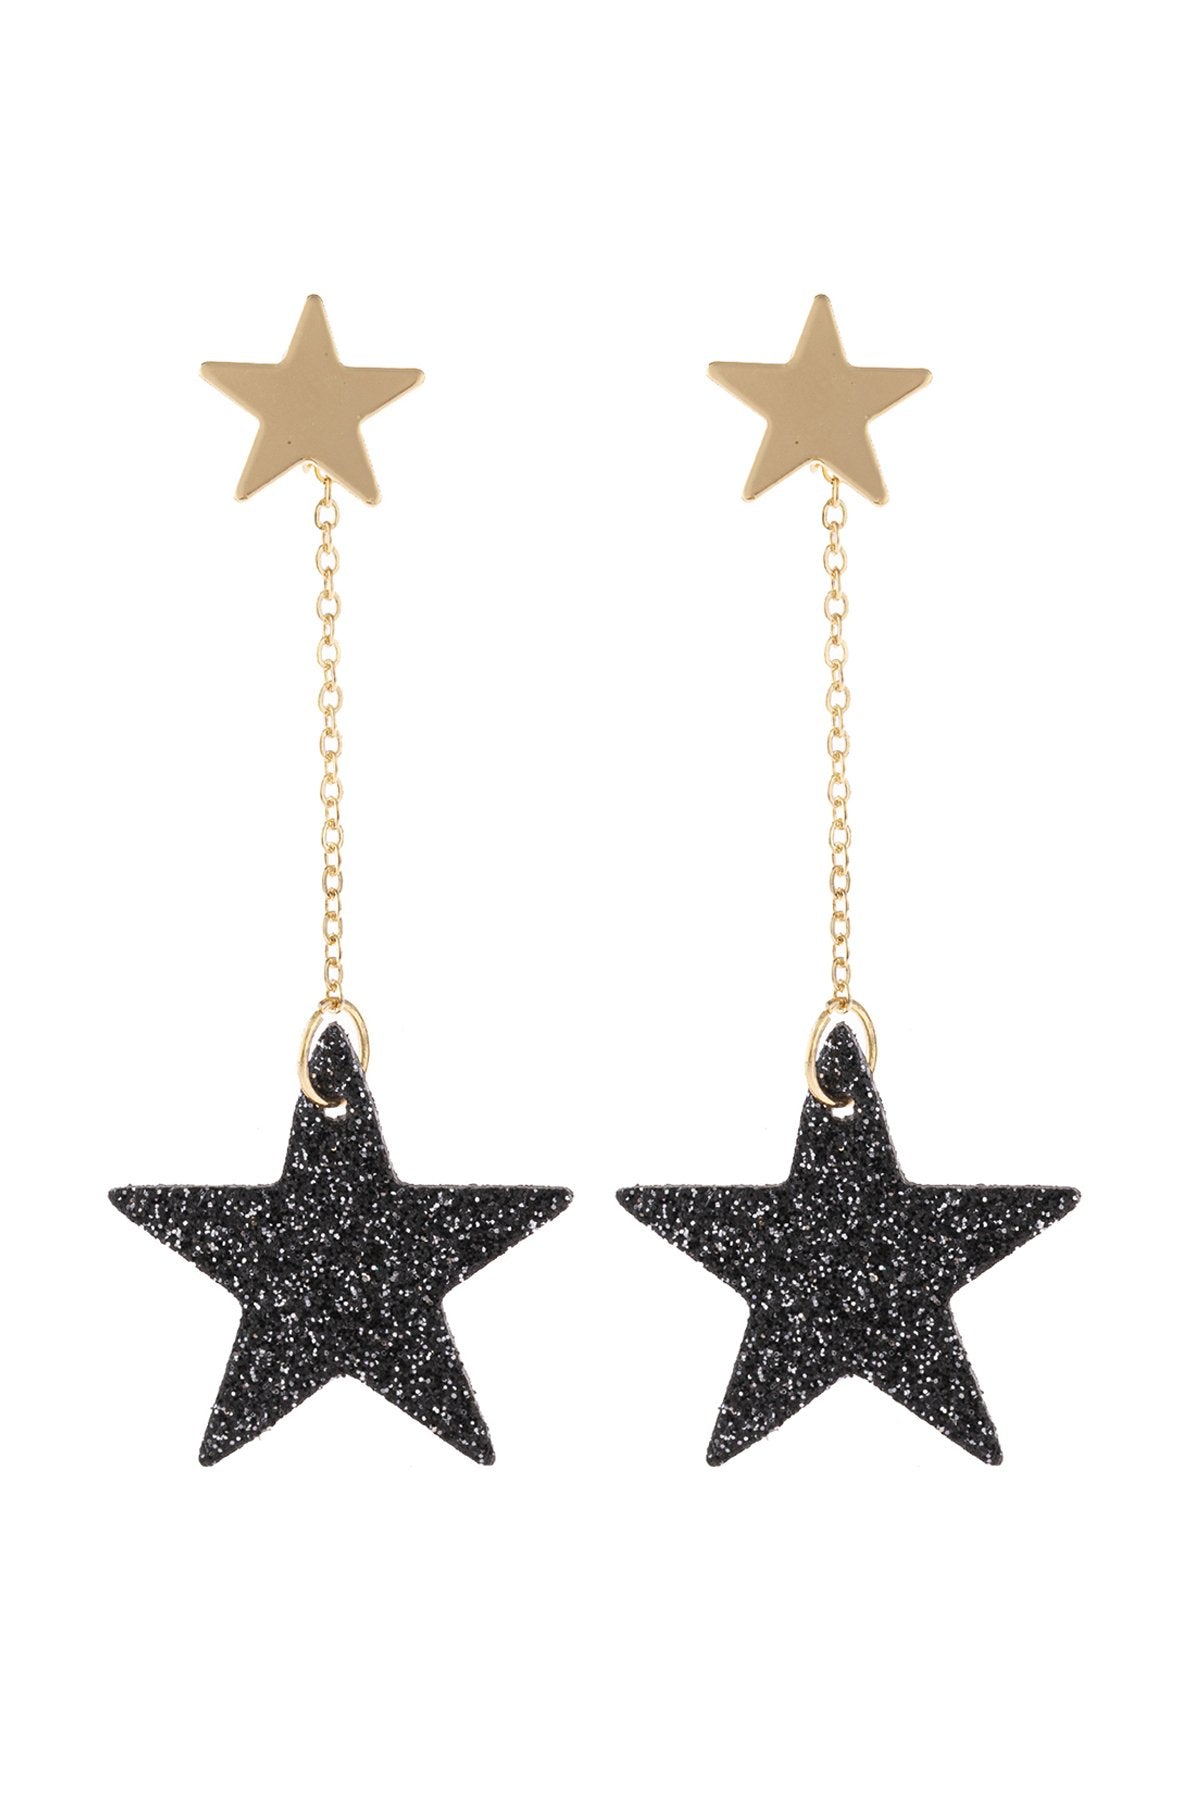 Hde3059 - Dangling Glitter Star Earrings